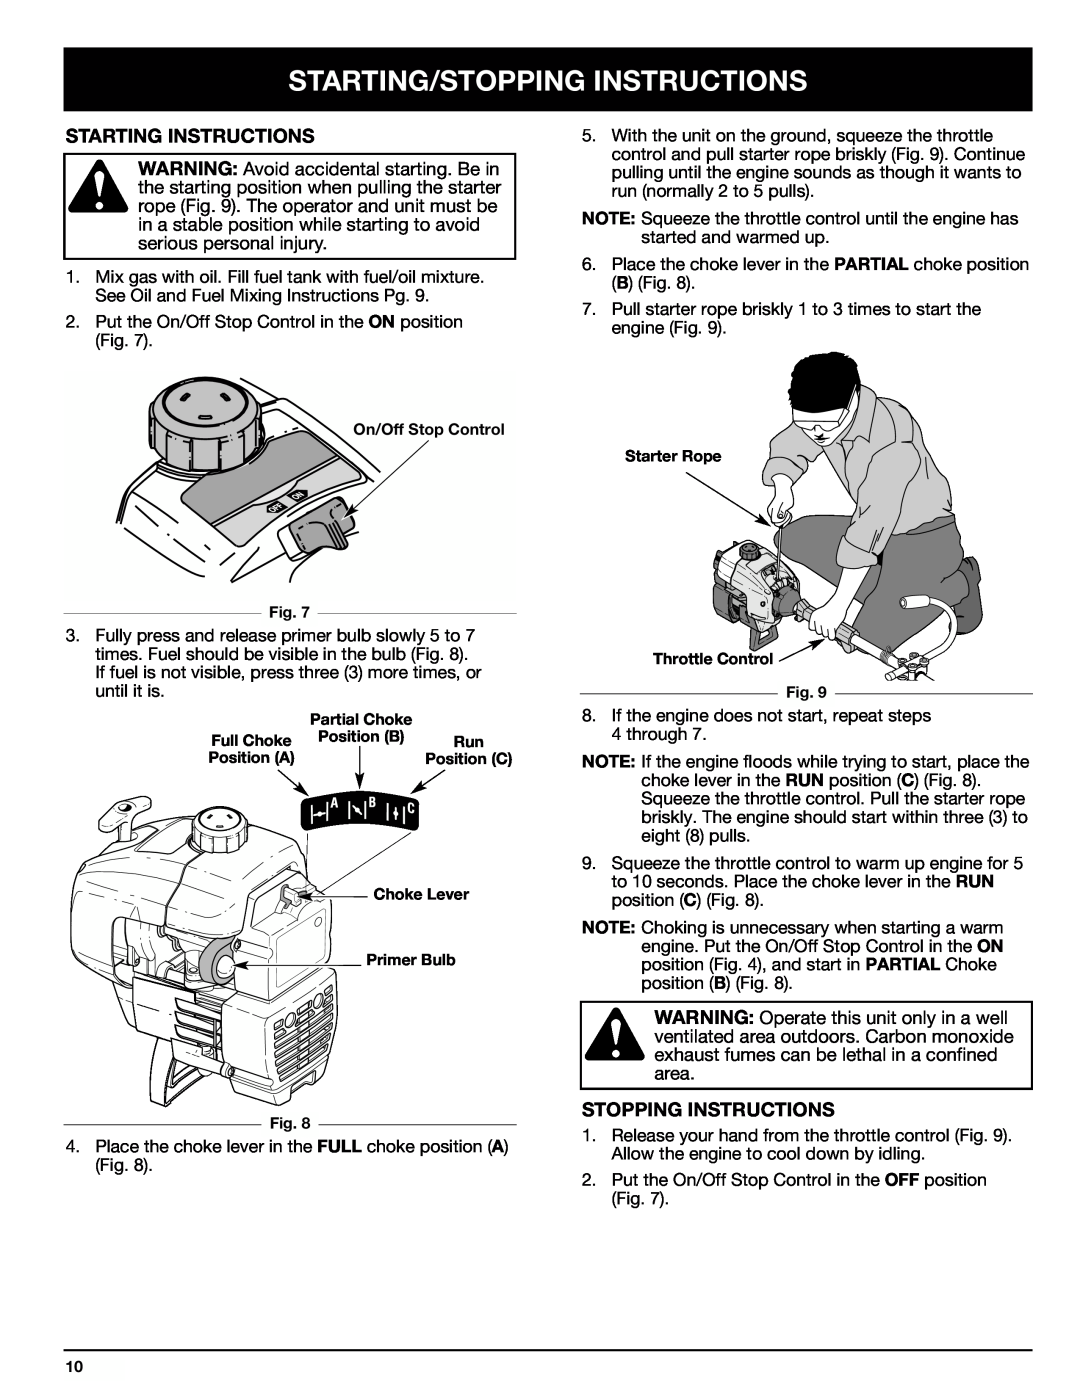 Ryobi 767rj manual Starting/Stopping Instructions, Starting Instructions 